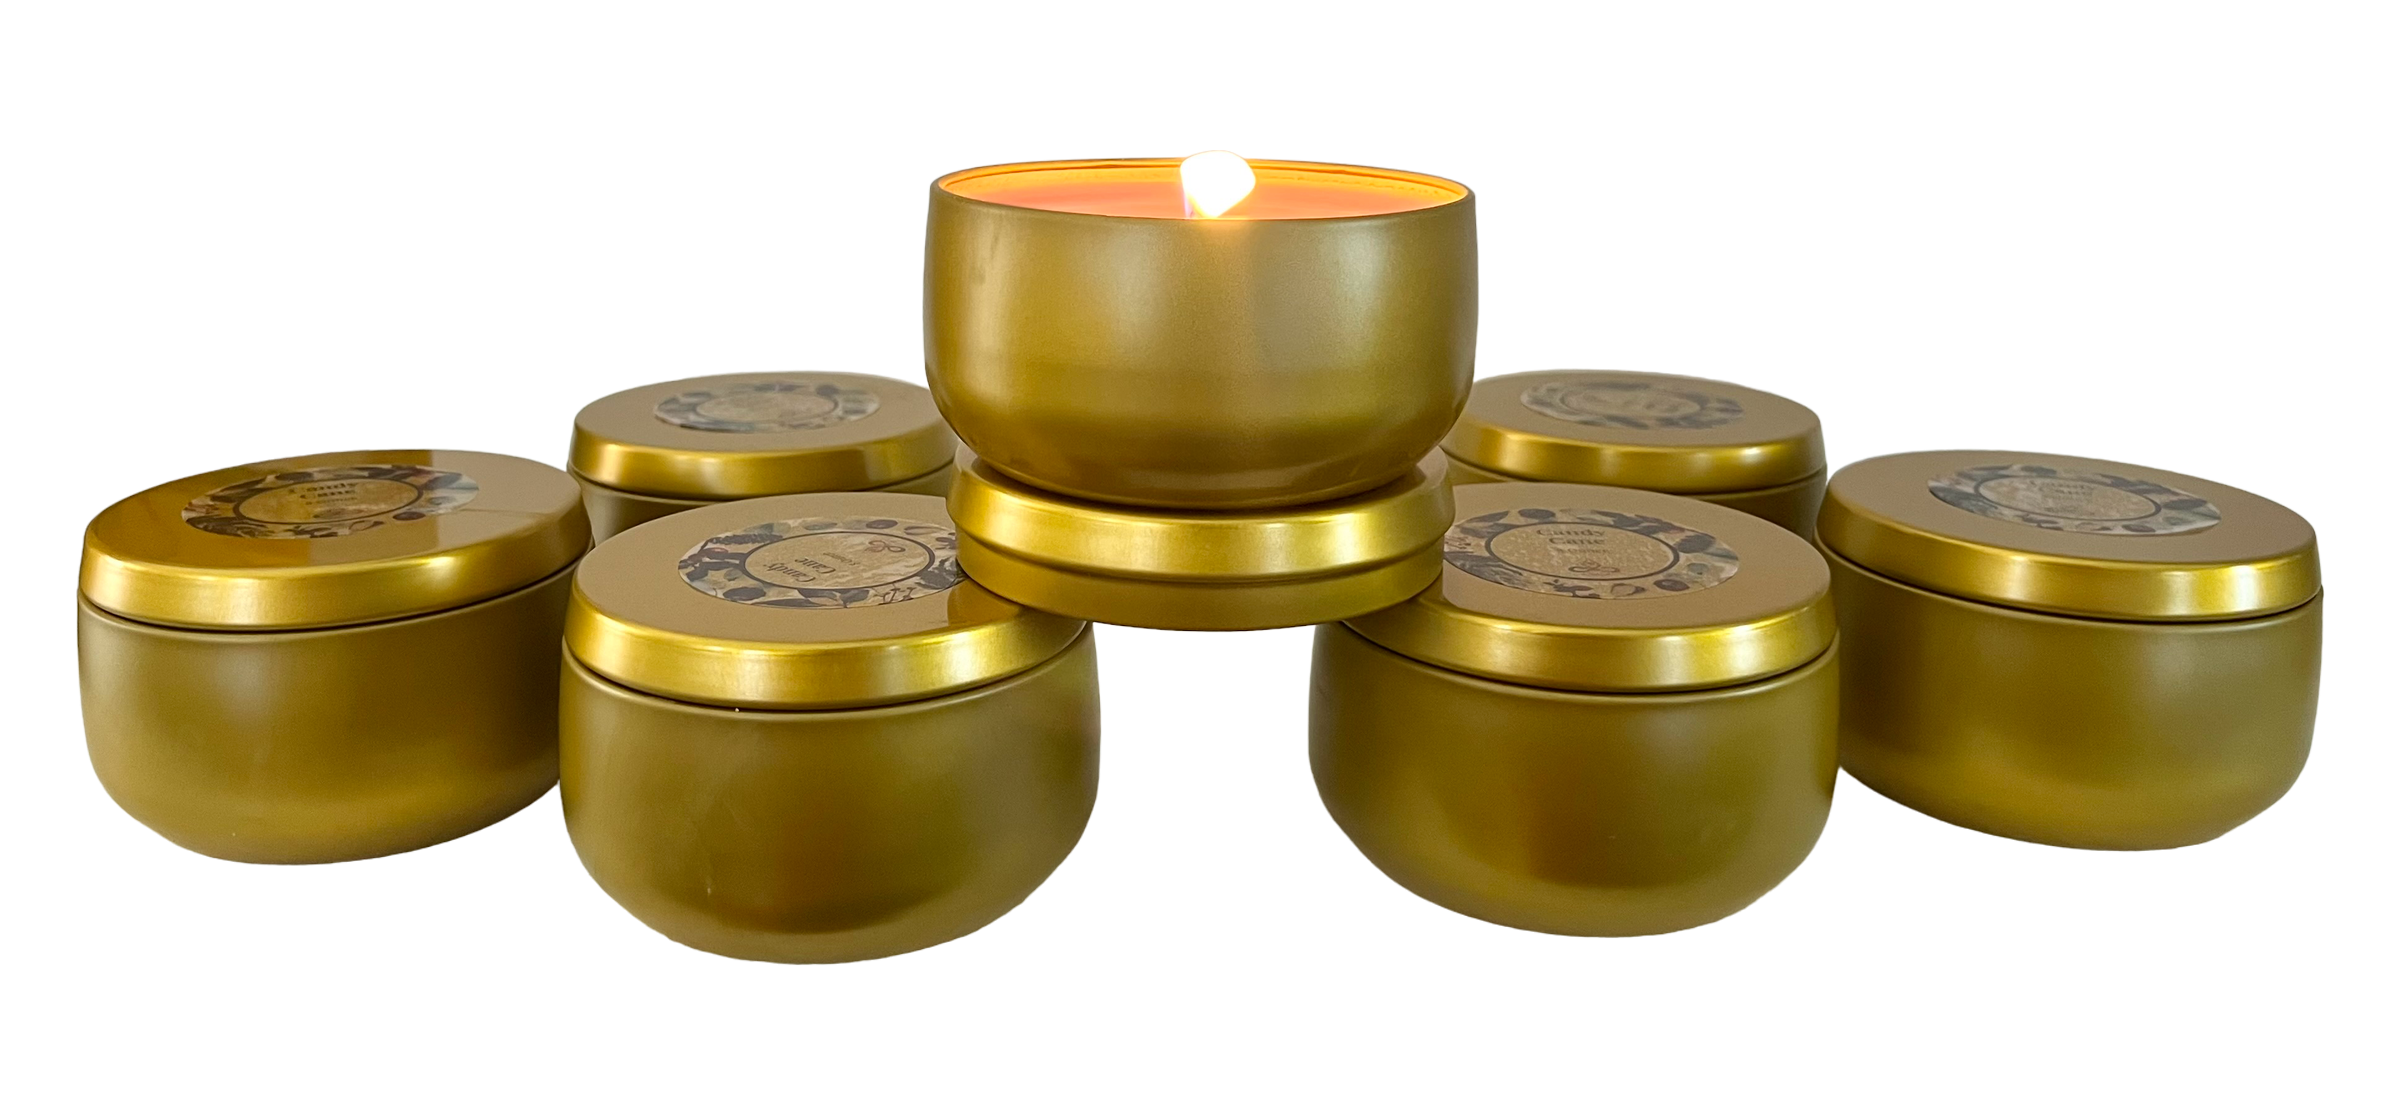 Frankincense & Myrrh Candle in a Matt Gold Tin